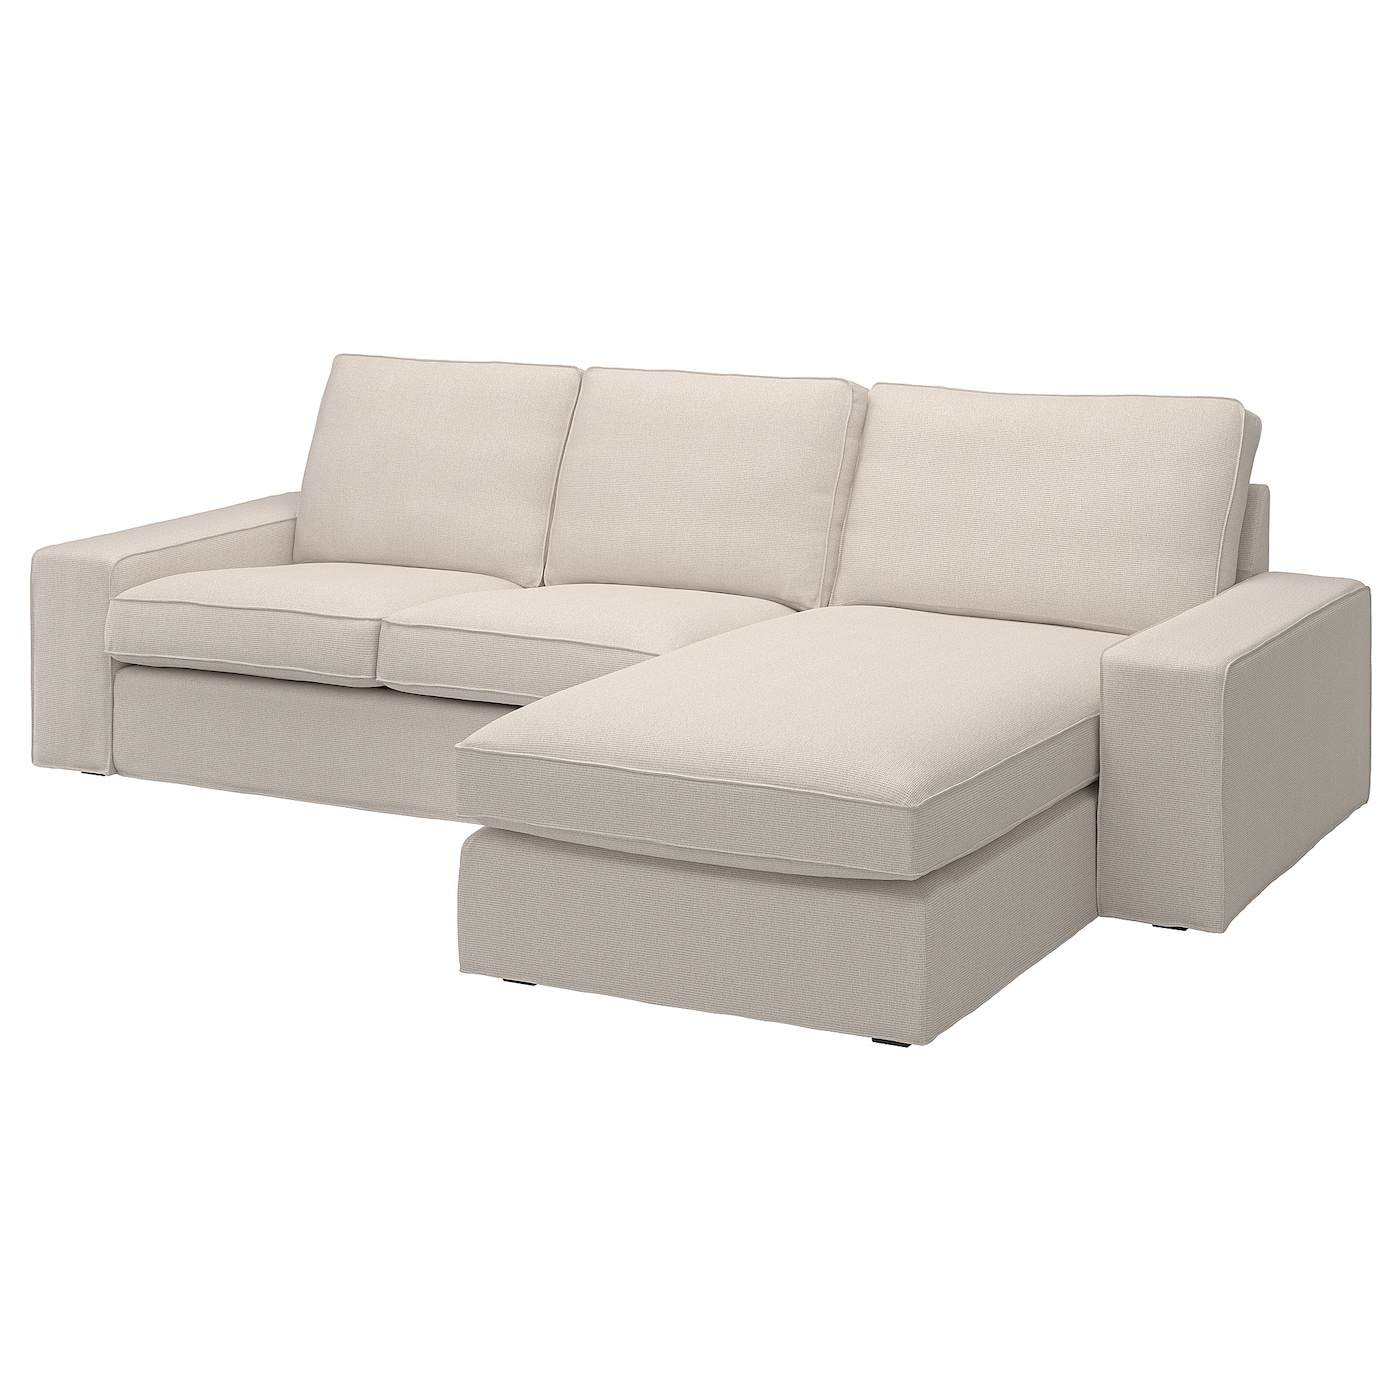 2-местный диван и кушетка - IKEA KIVIK/КИВИК ИКЕА, 83х280х95(163) см, серый